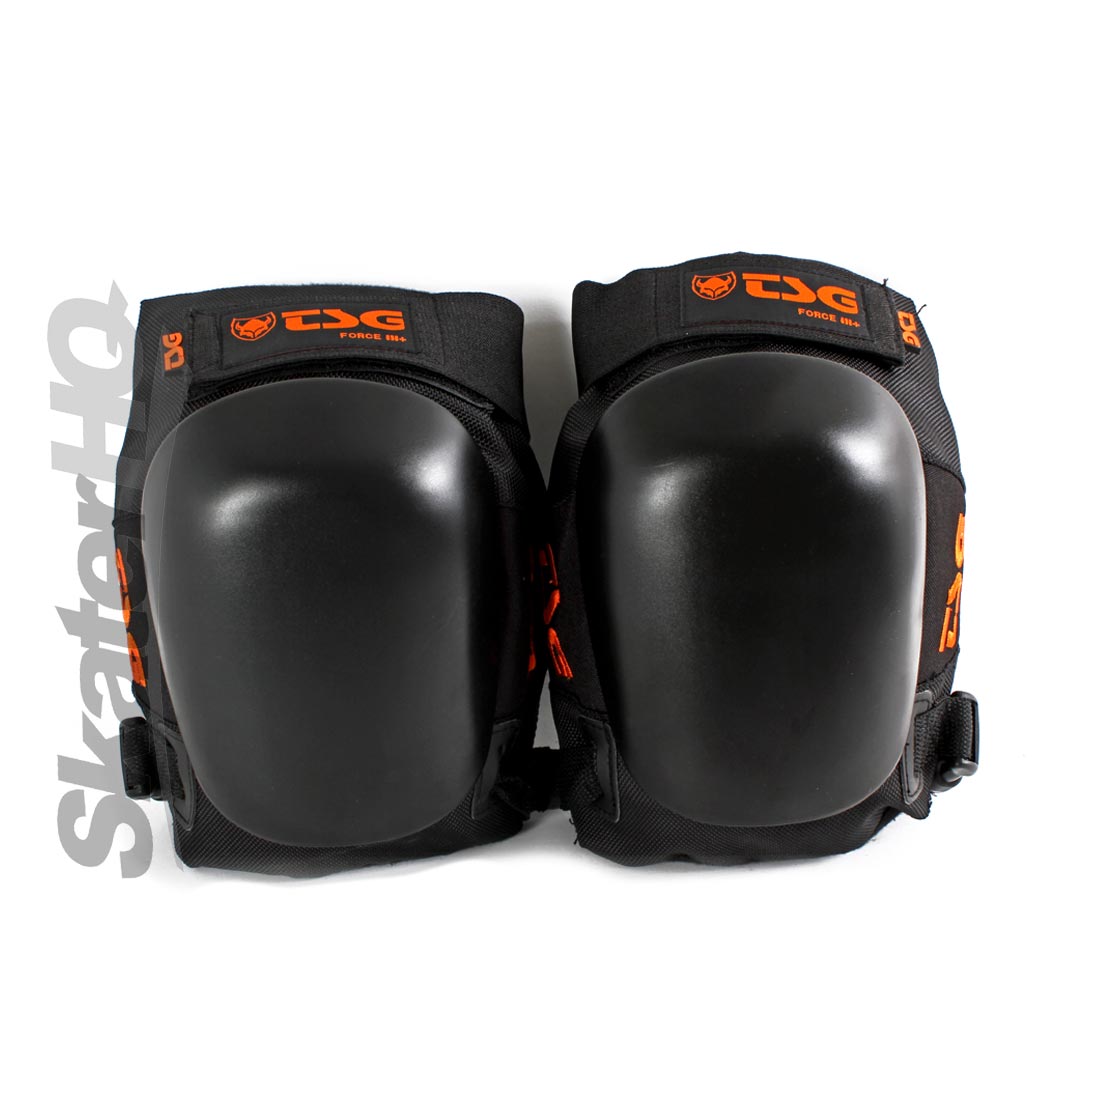 TSG Force 3 Plus D30 Kneepad XL Protective Gear